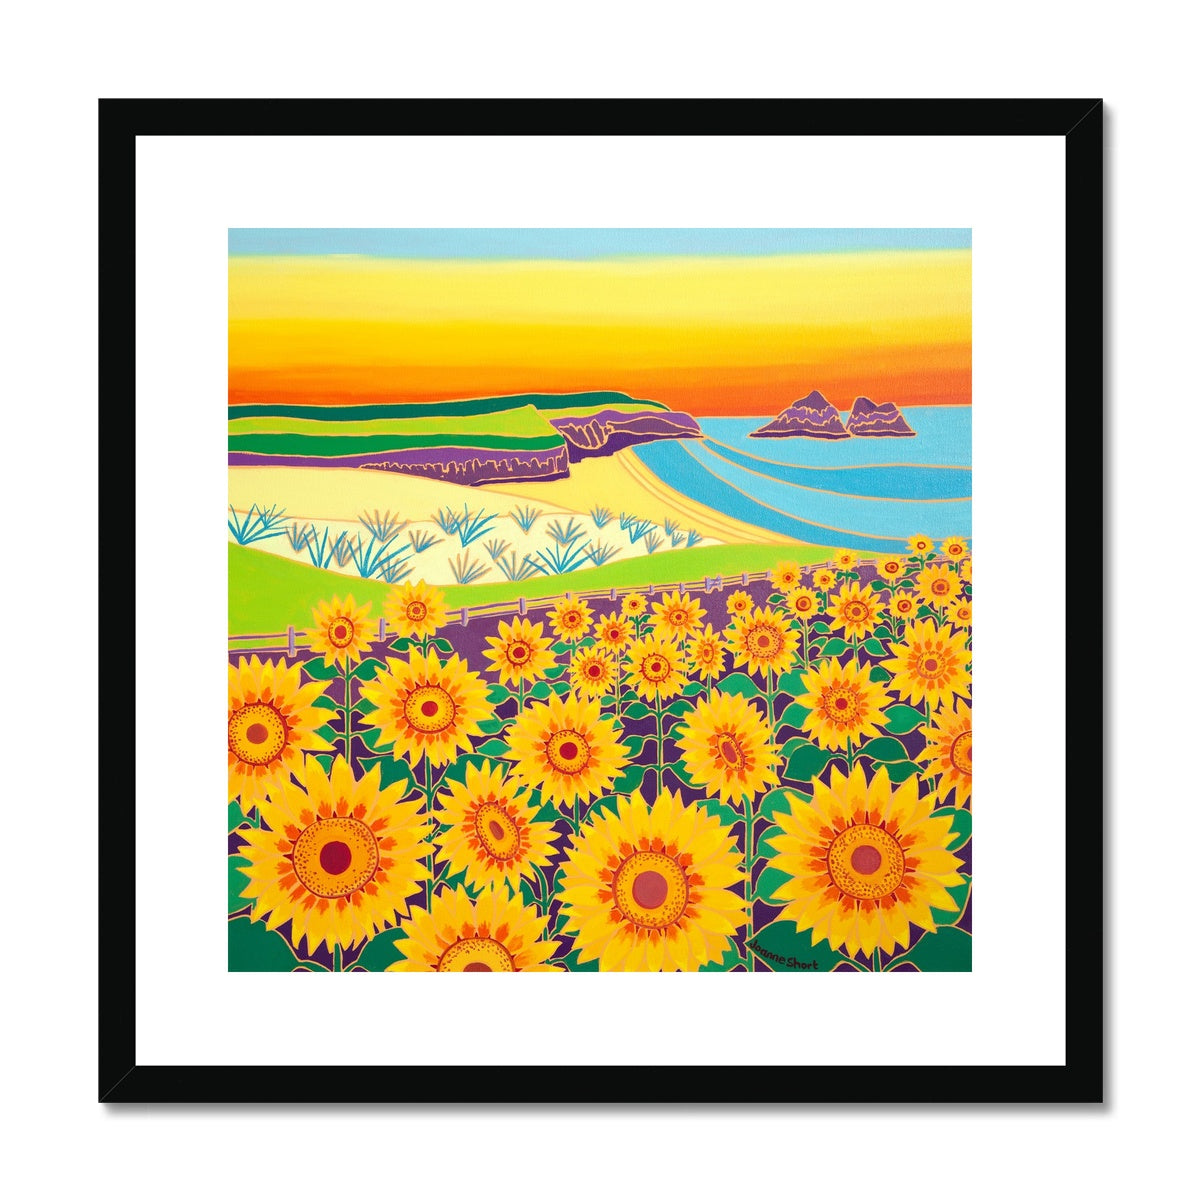 Joanne Short Framed Open Edition Cornish Fine Art Print. 'Sunny Sunflowers, Holywell Bay'. Cornwall Art Gallery